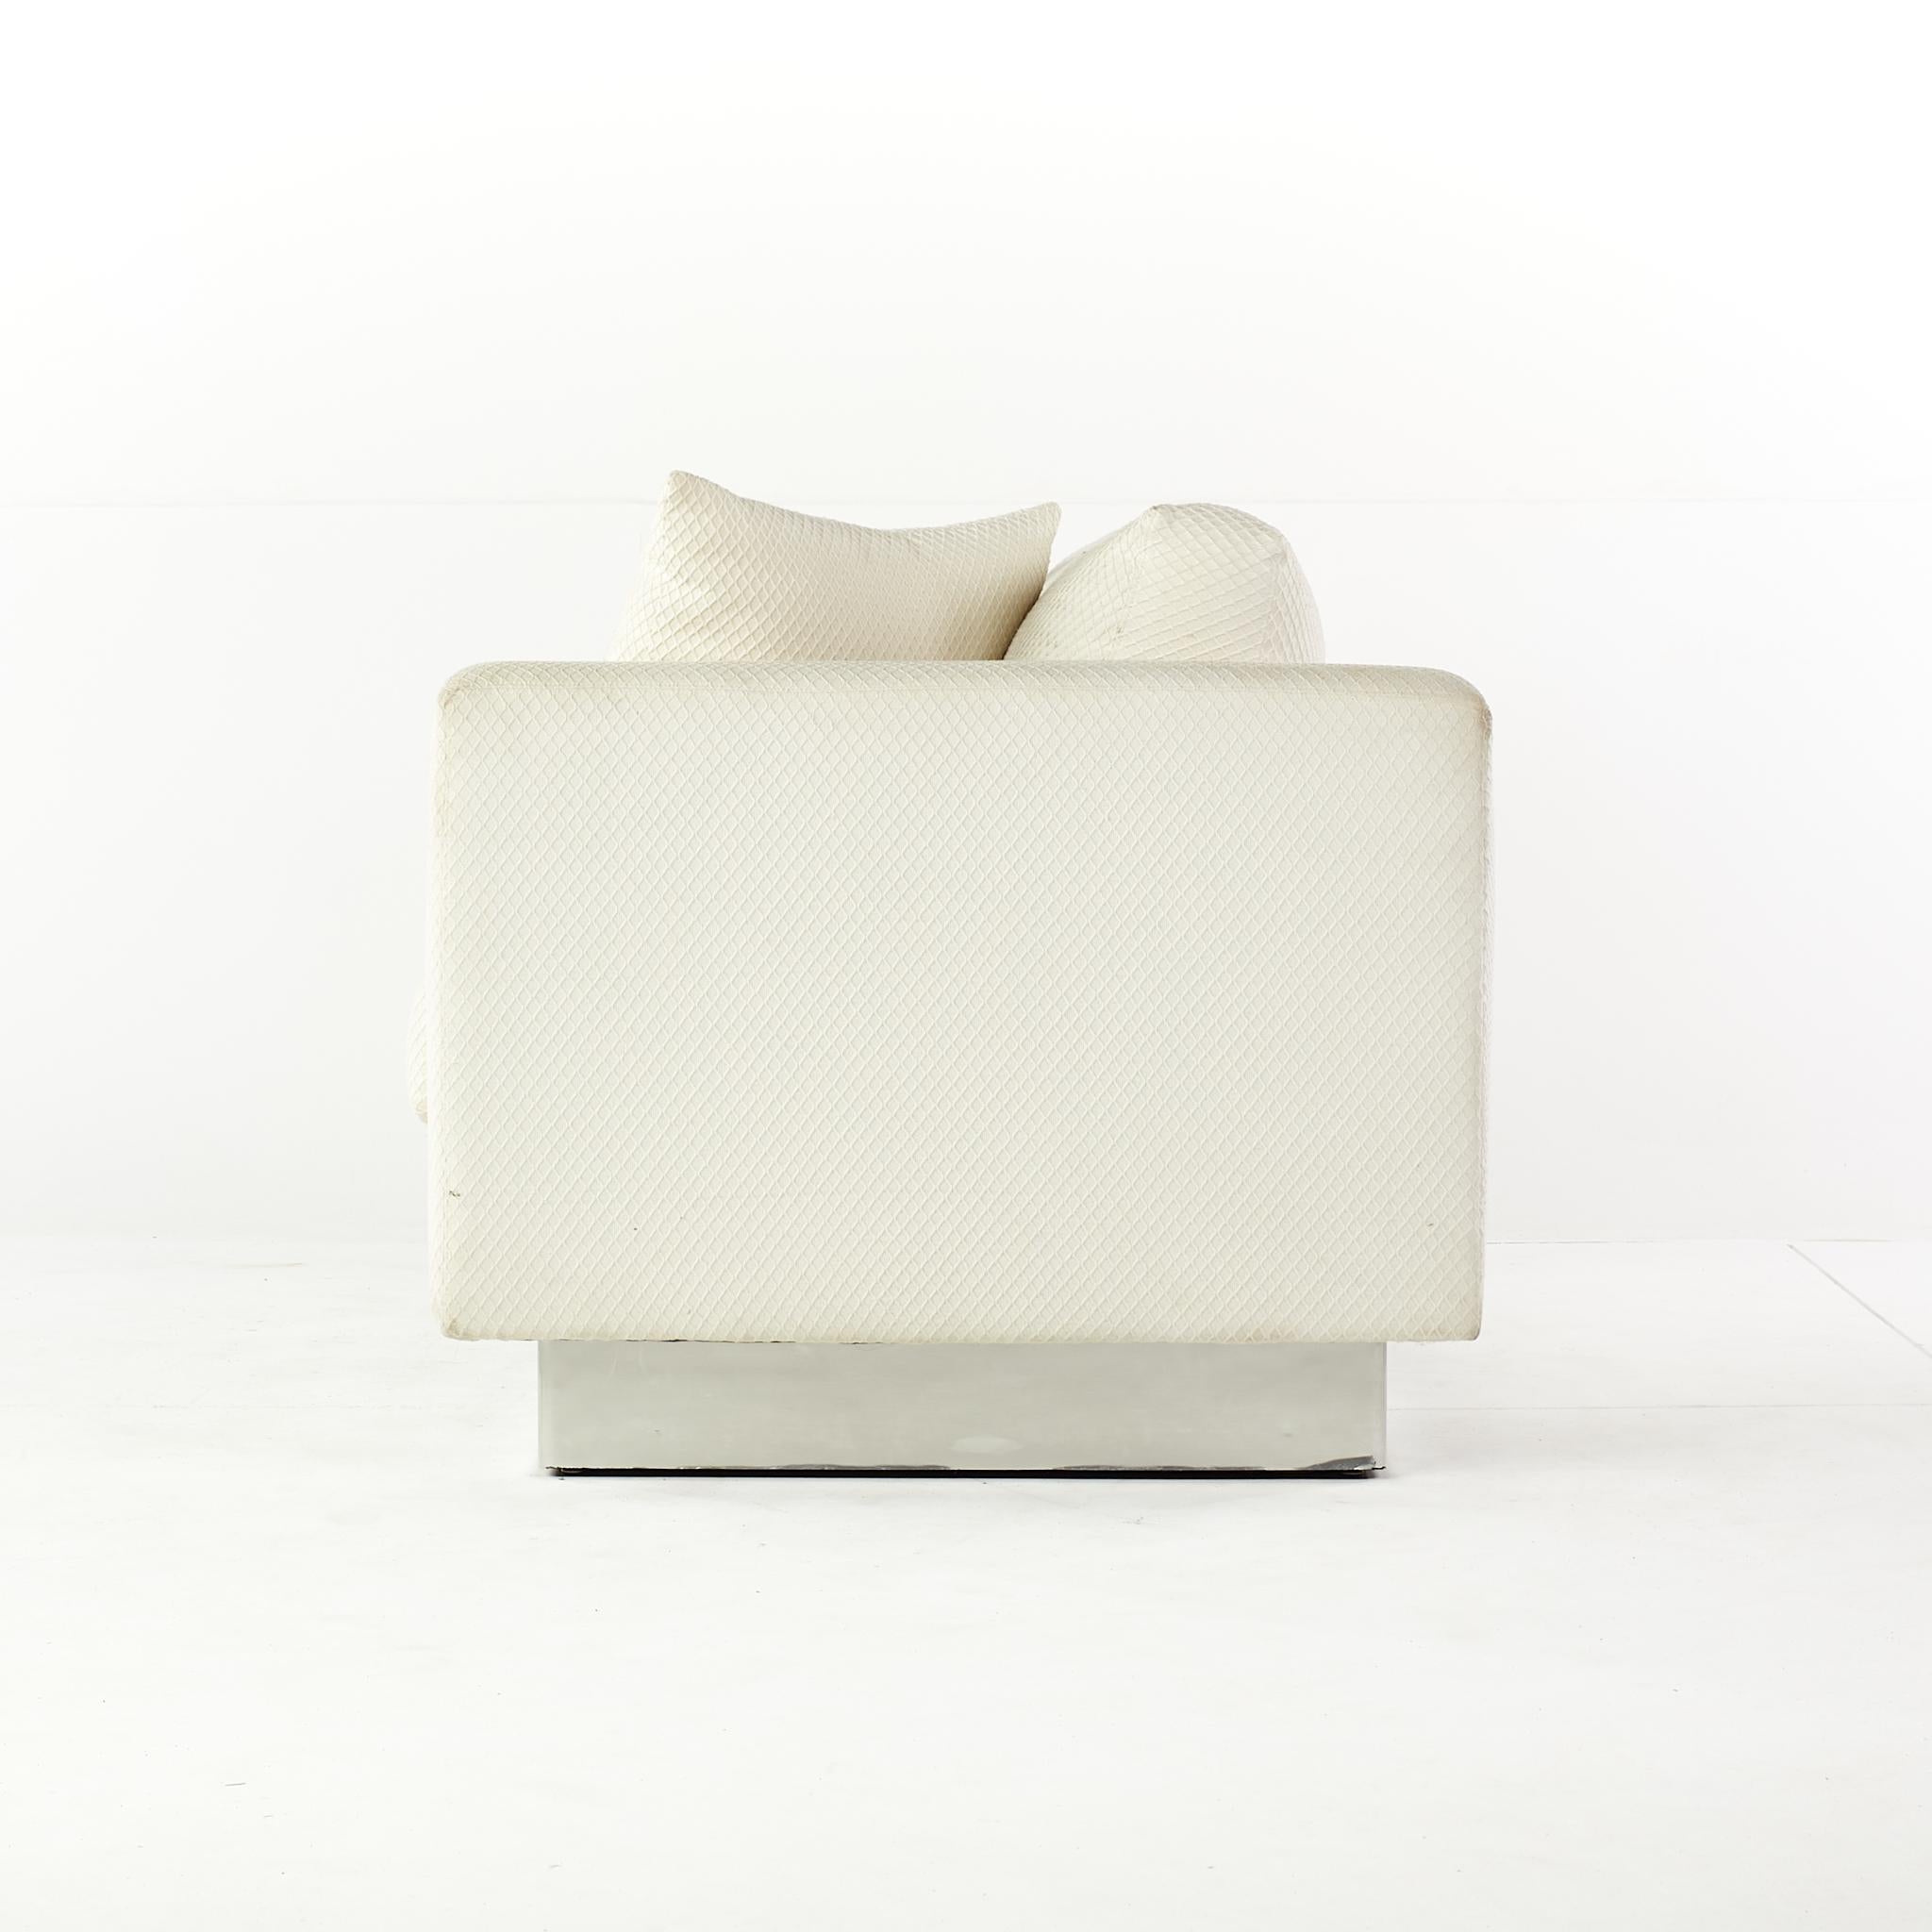 Upholstery Milo Baughman Style Mid-Century Modernist Chrome Base Loveseat For Sale